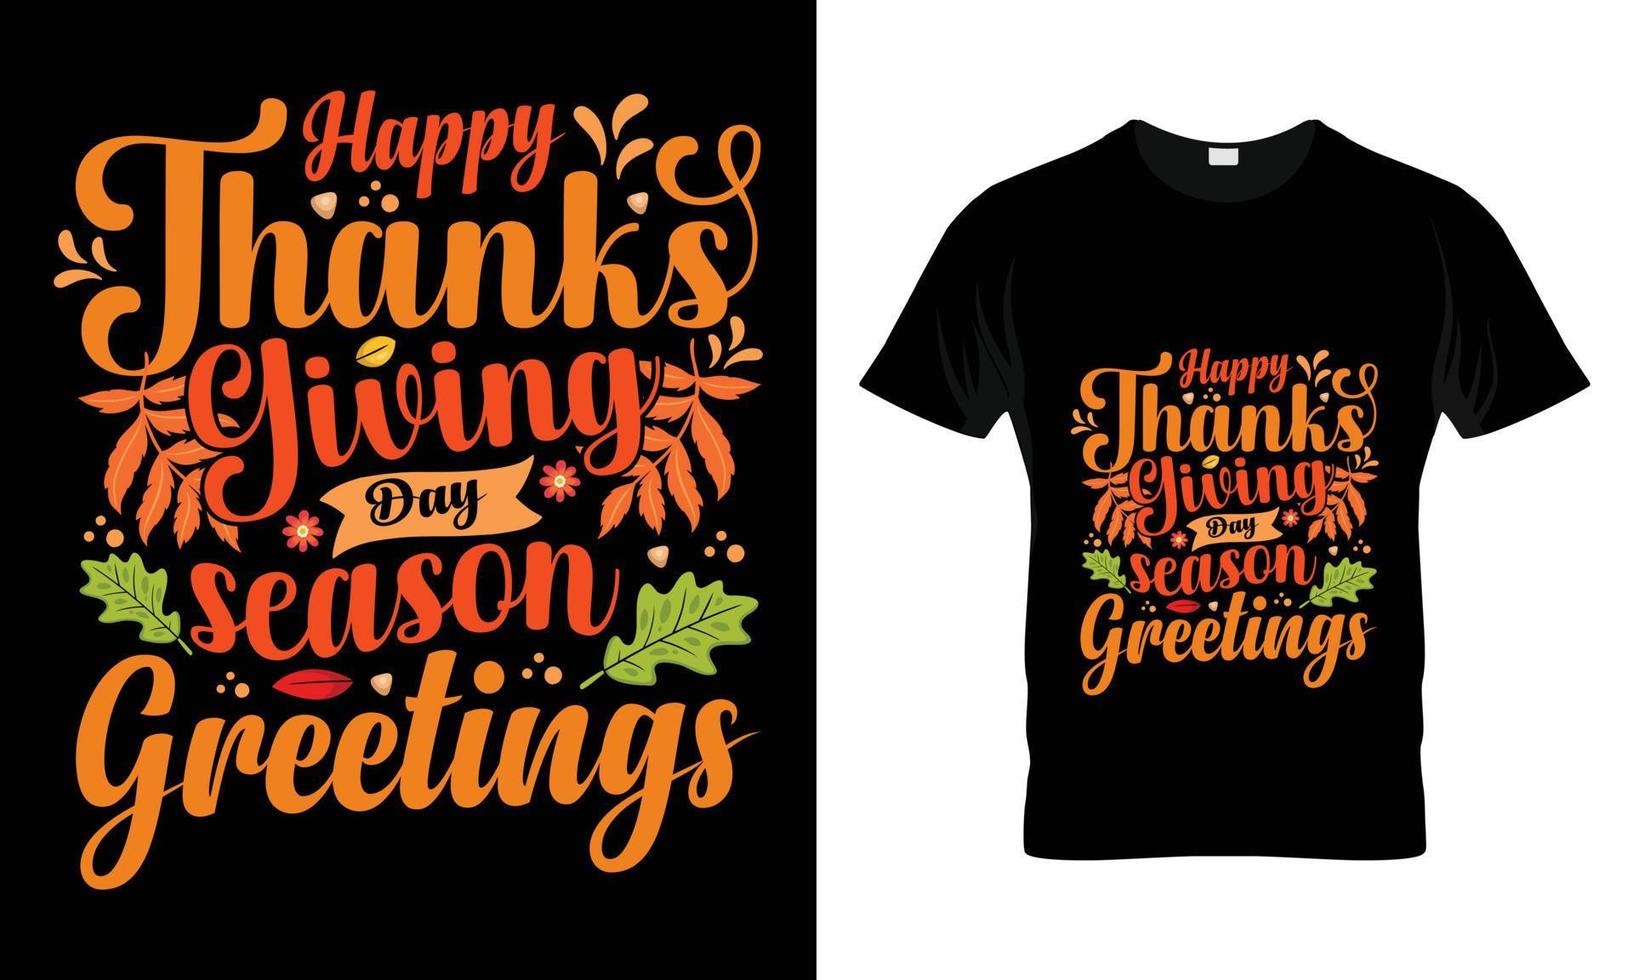 Happy thanksgiving day season greetings vector